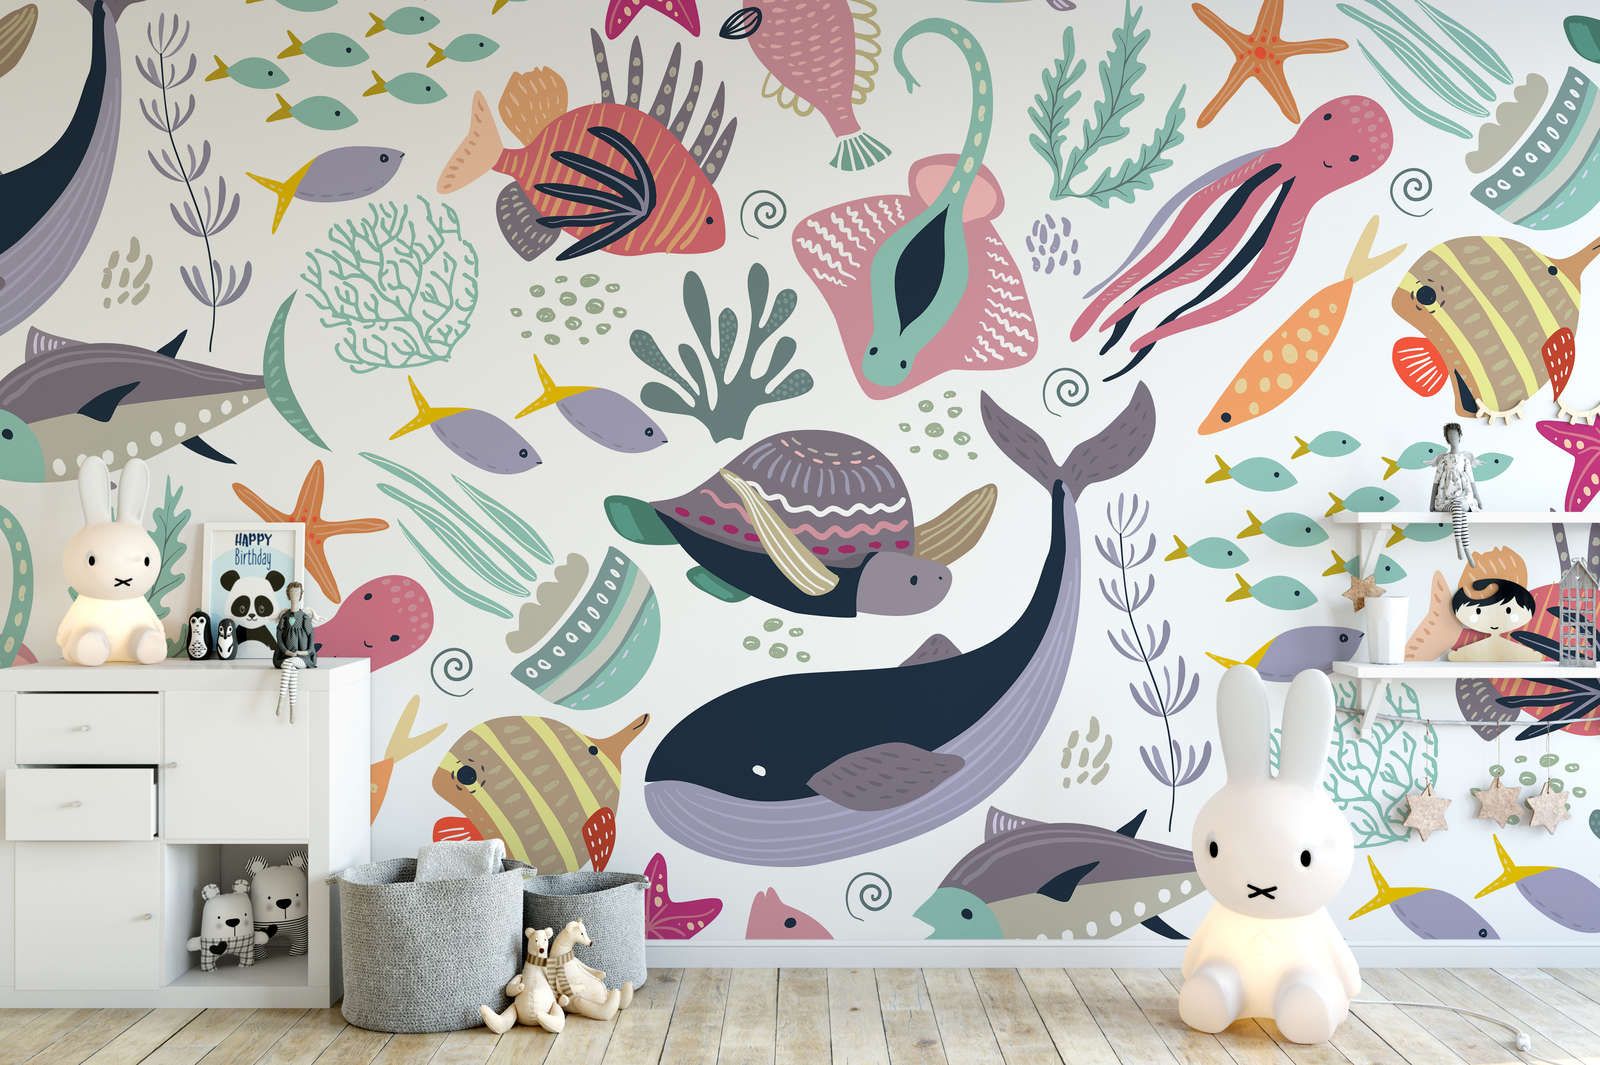             Kinderkamermuurschildering met onderwaterdieren - Glad & parelmoervlies
        